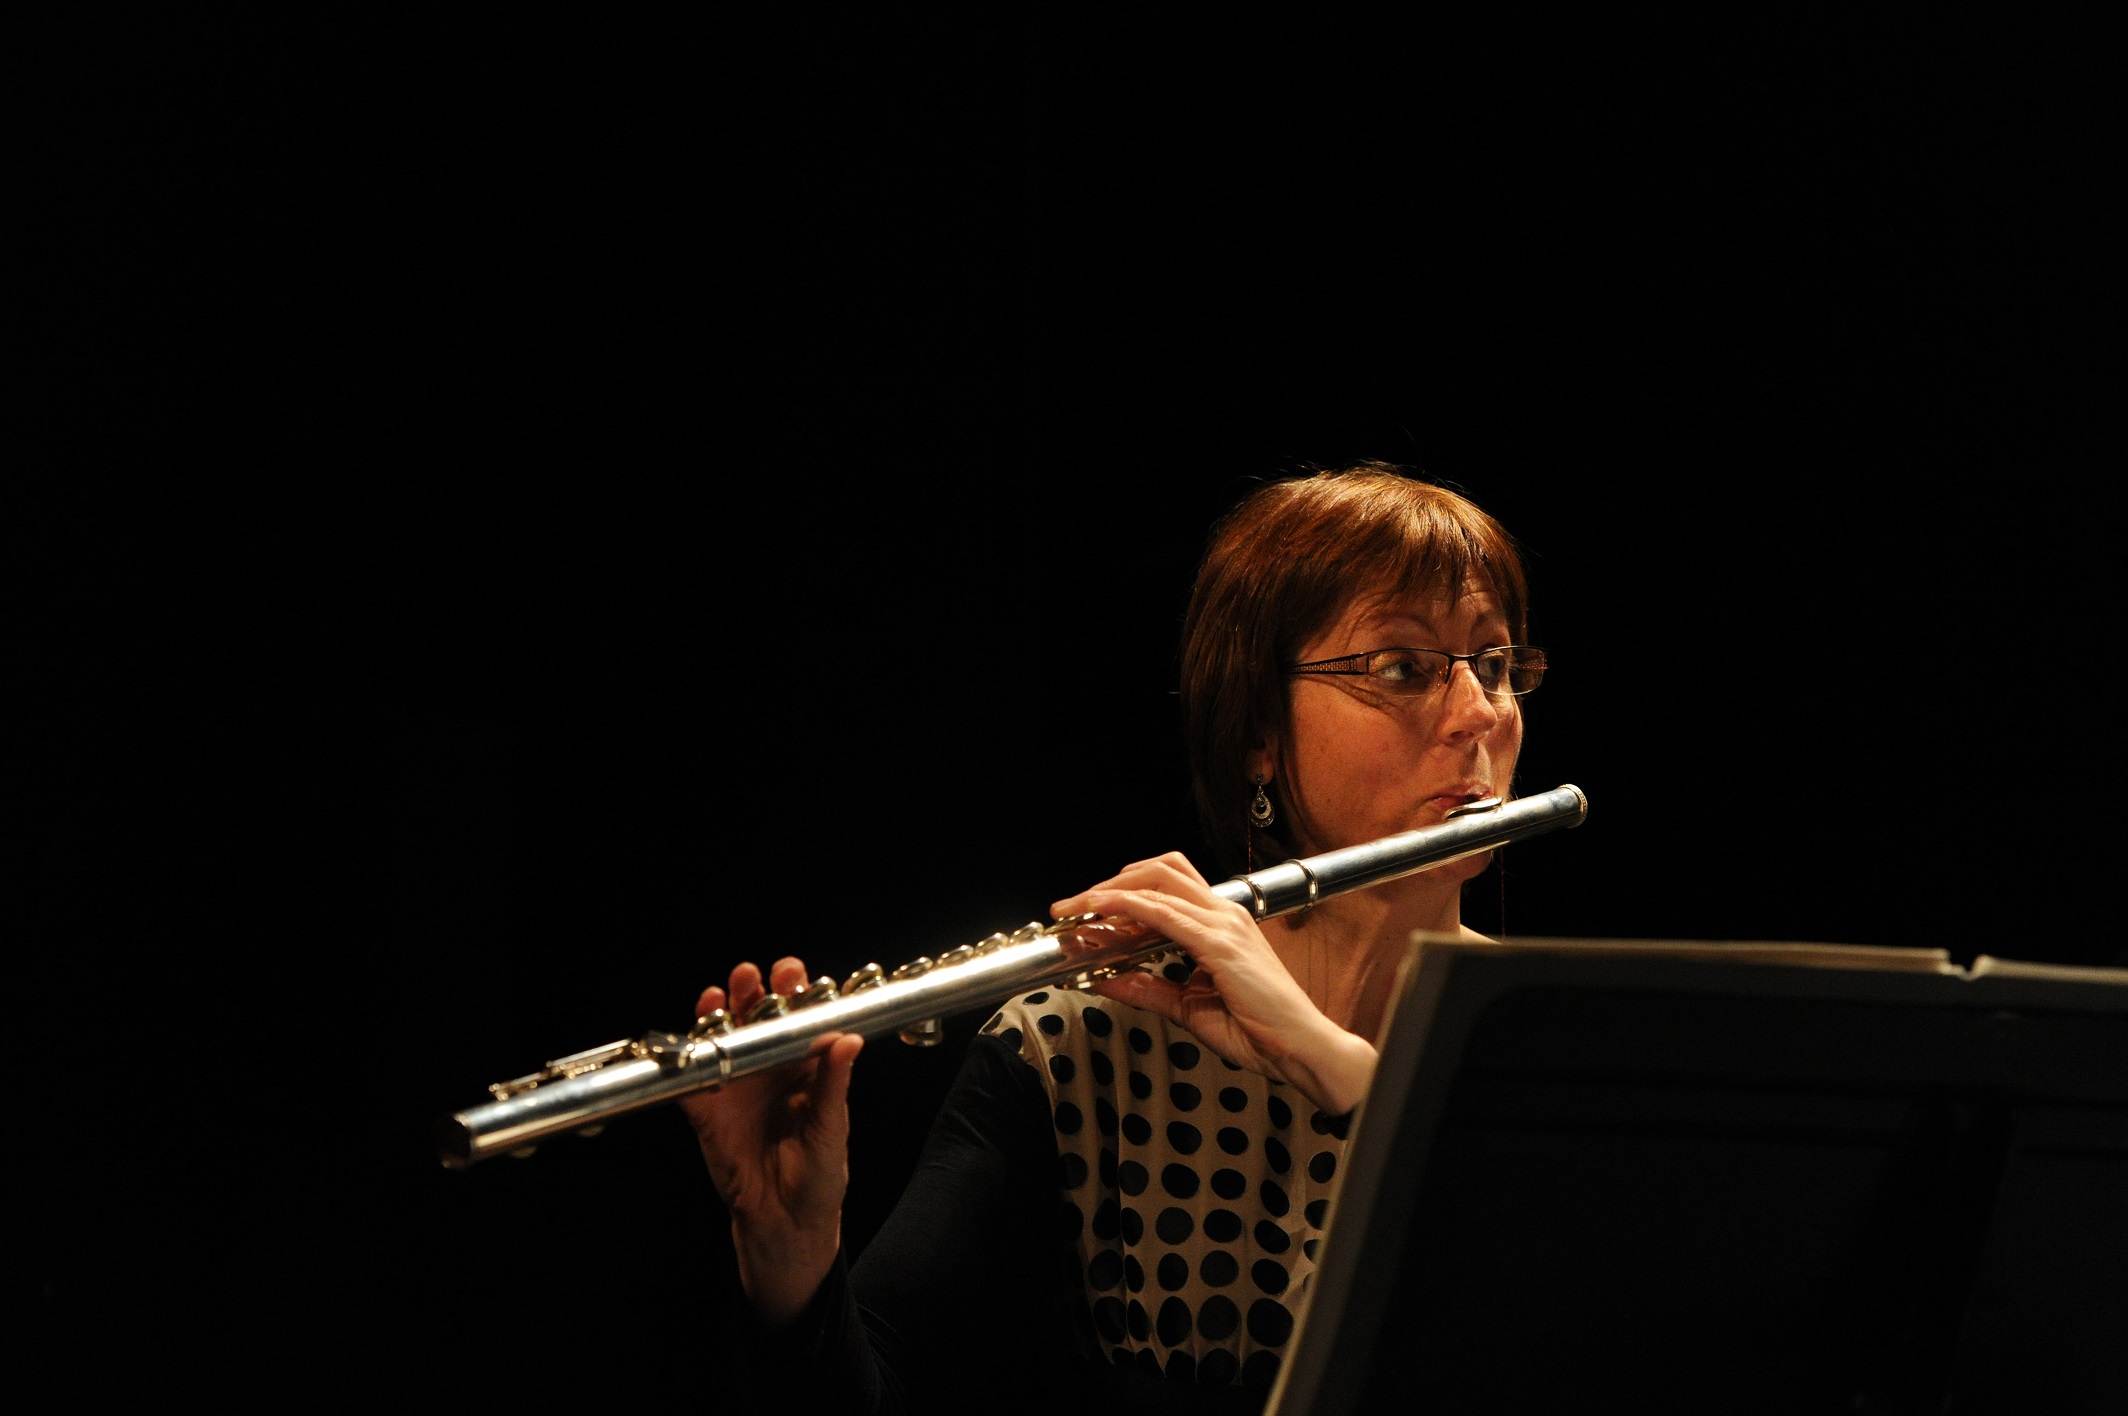 Sophie Cherrier, principal flautist of the Ensemble InterContemporain